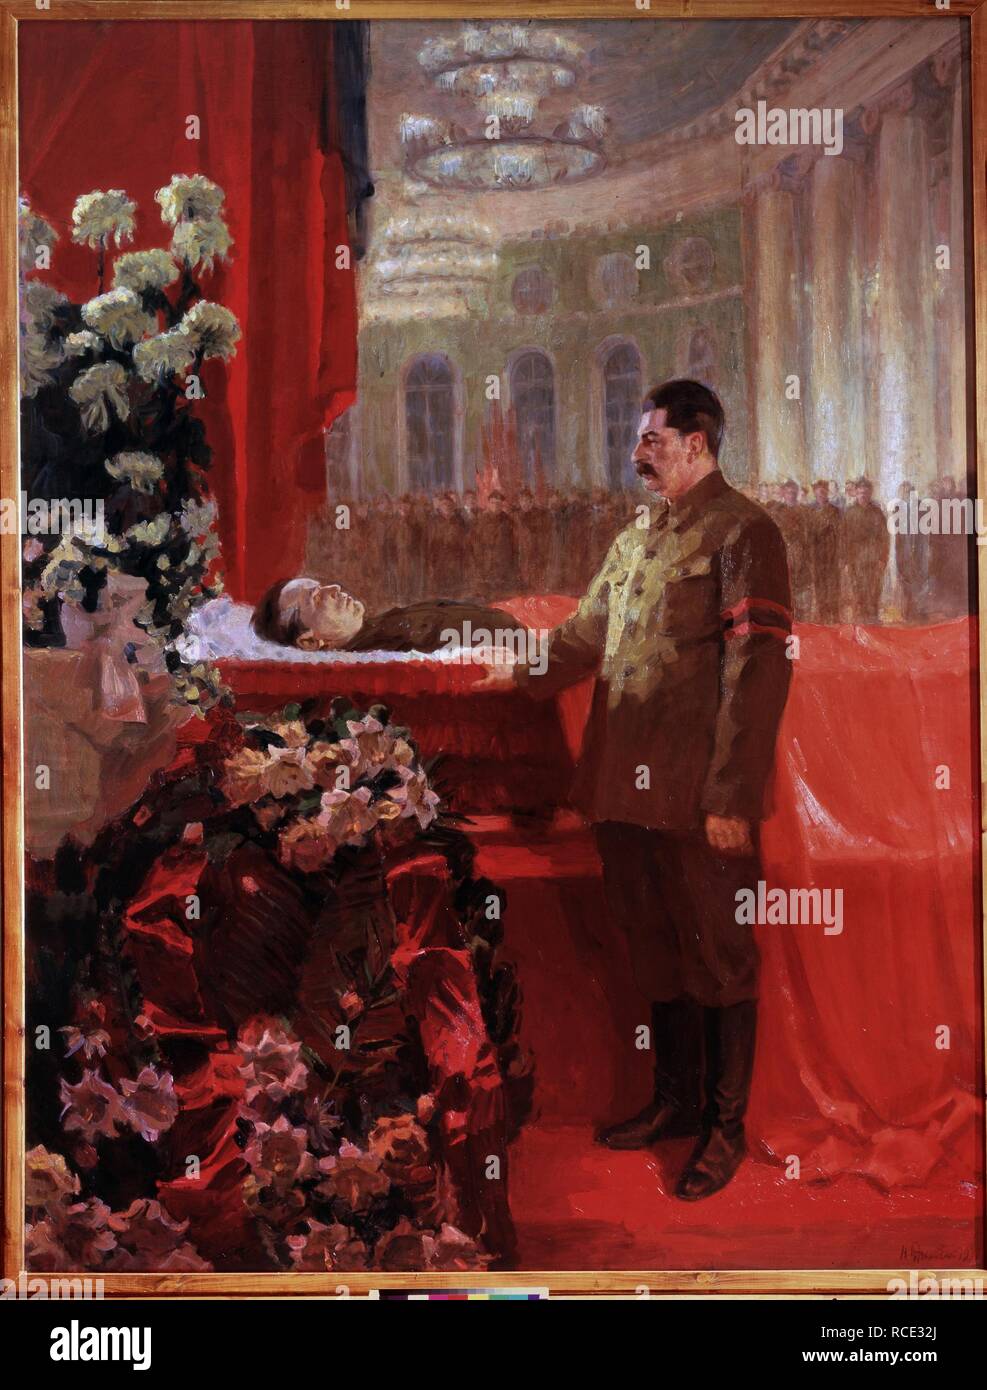 Joseph Stalin before the Sergei Kirov's coffin. Museum: State Russian Museum, St. Petersburg. Author: Rutkovsky, Nikolai Christoforovich. Stock Photo